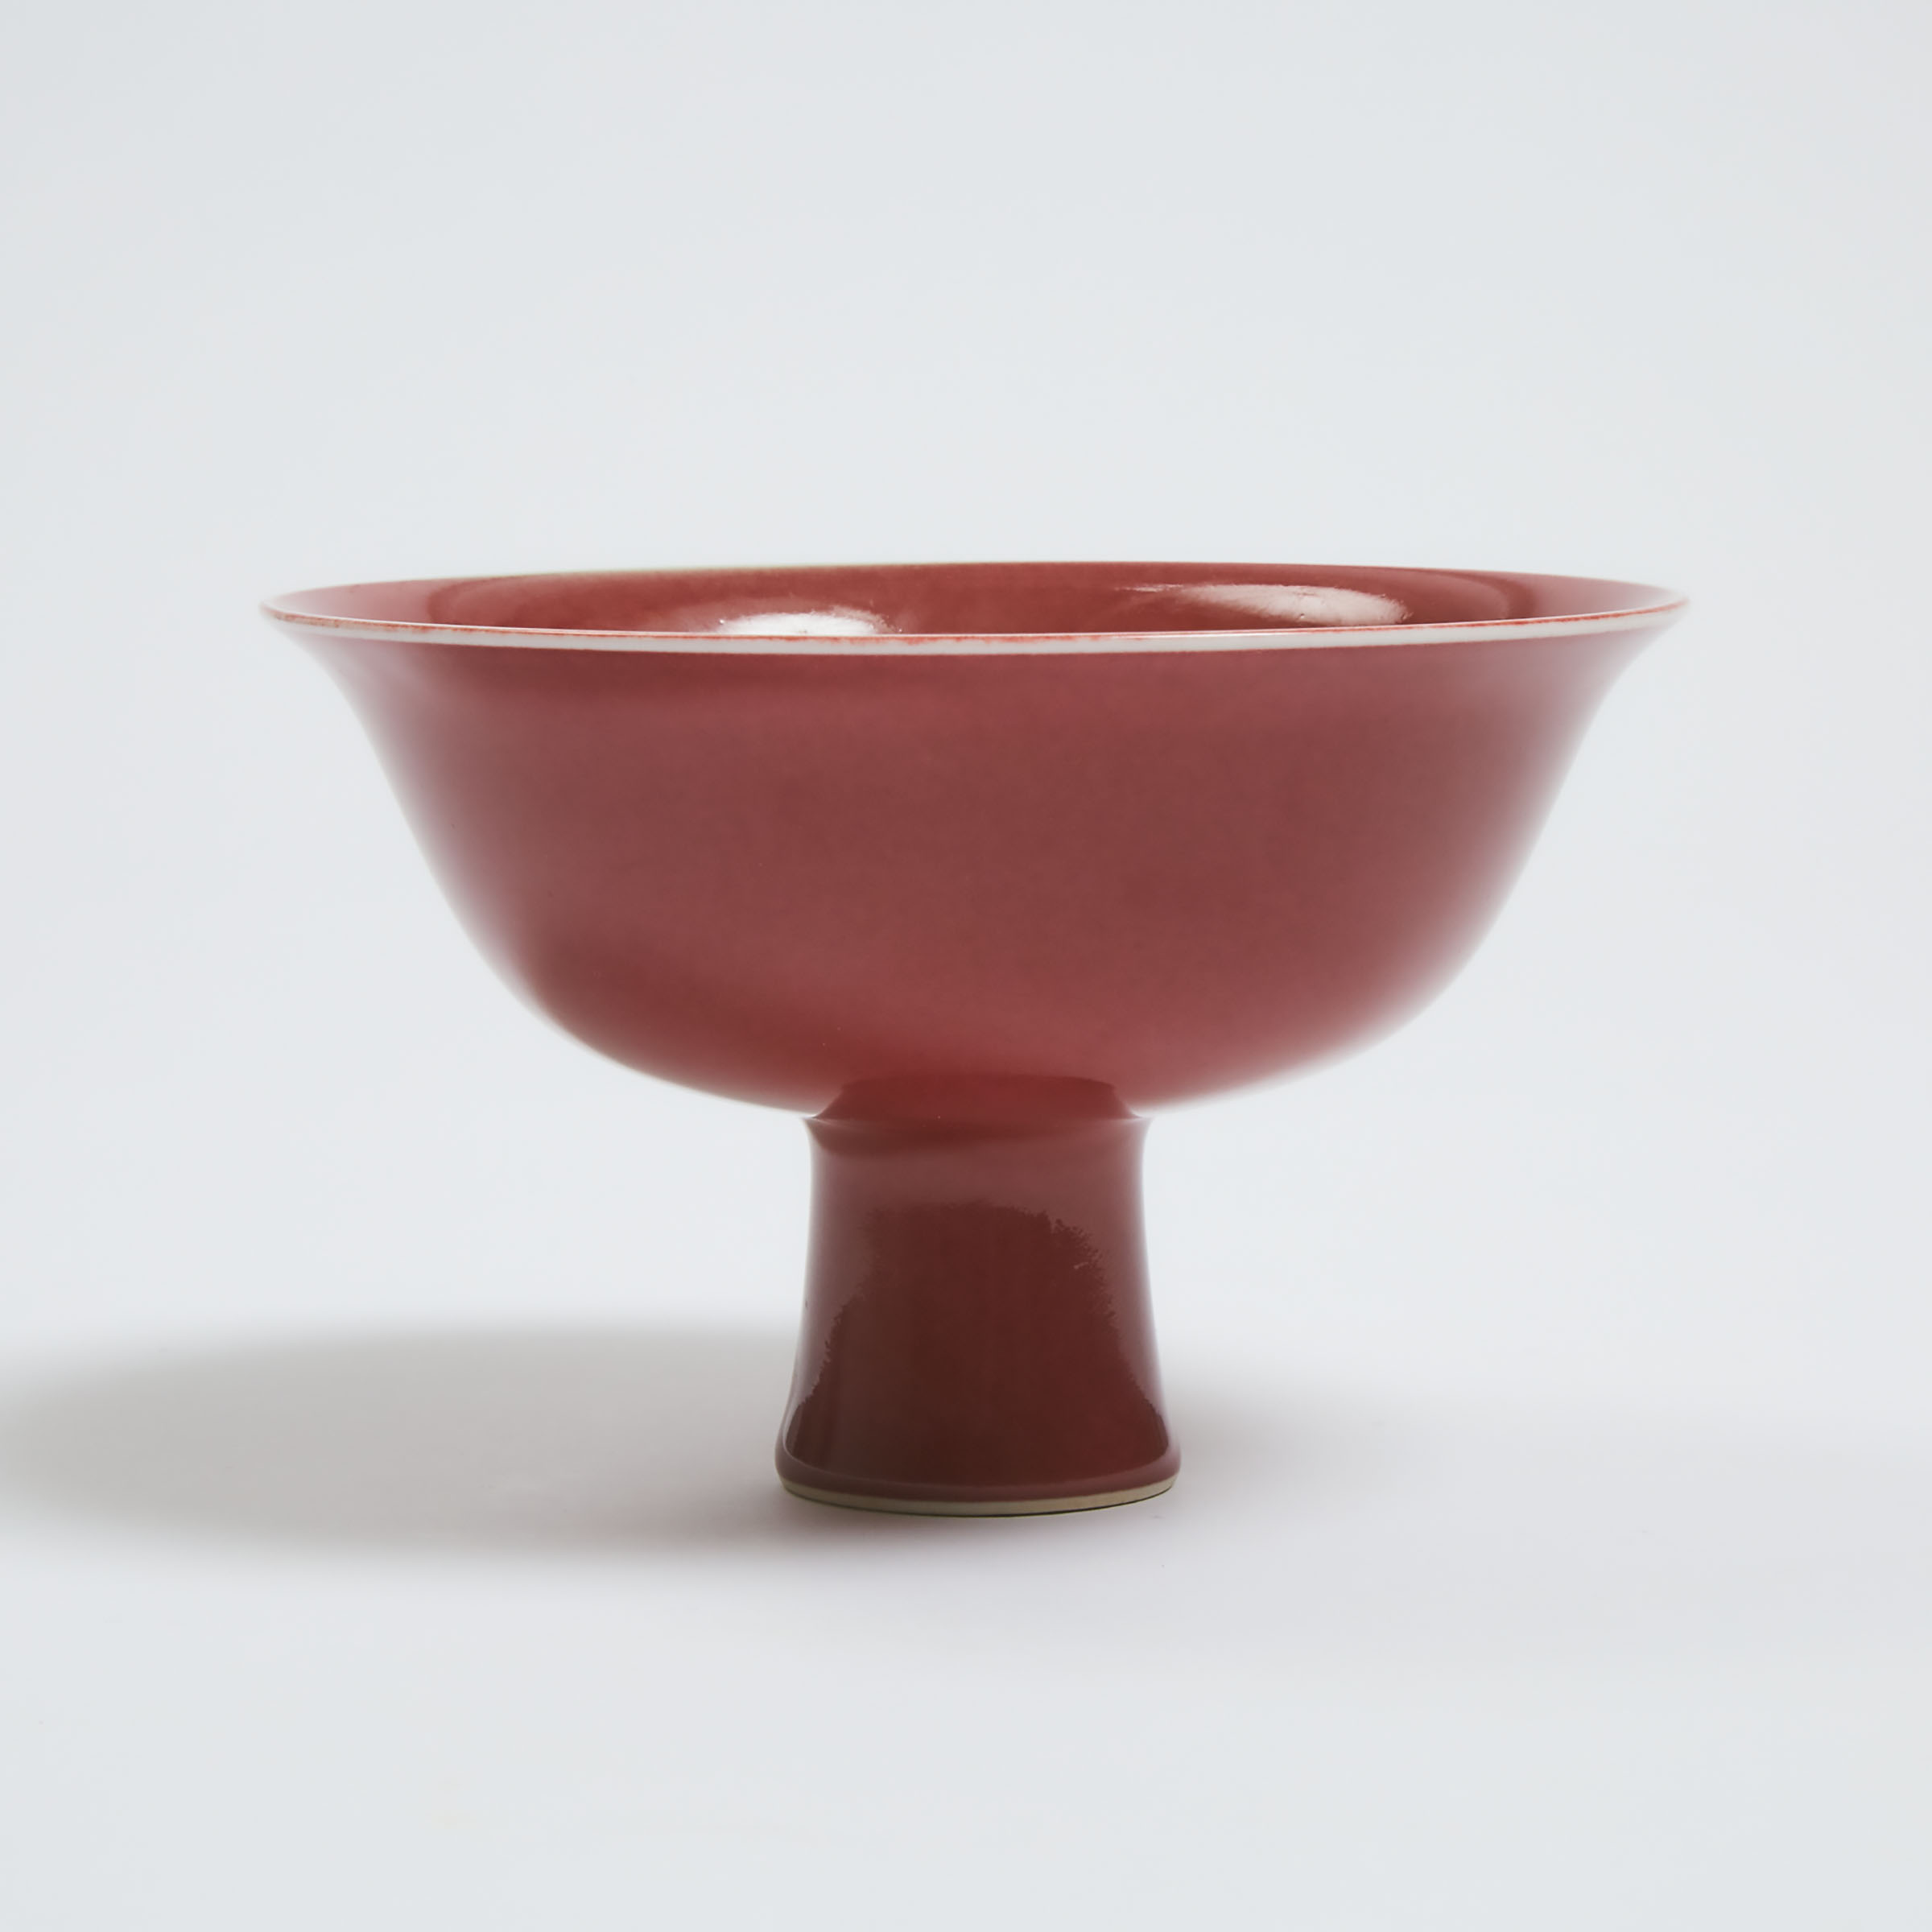 A Copper Red-Glazed Stem Bowl, Qing